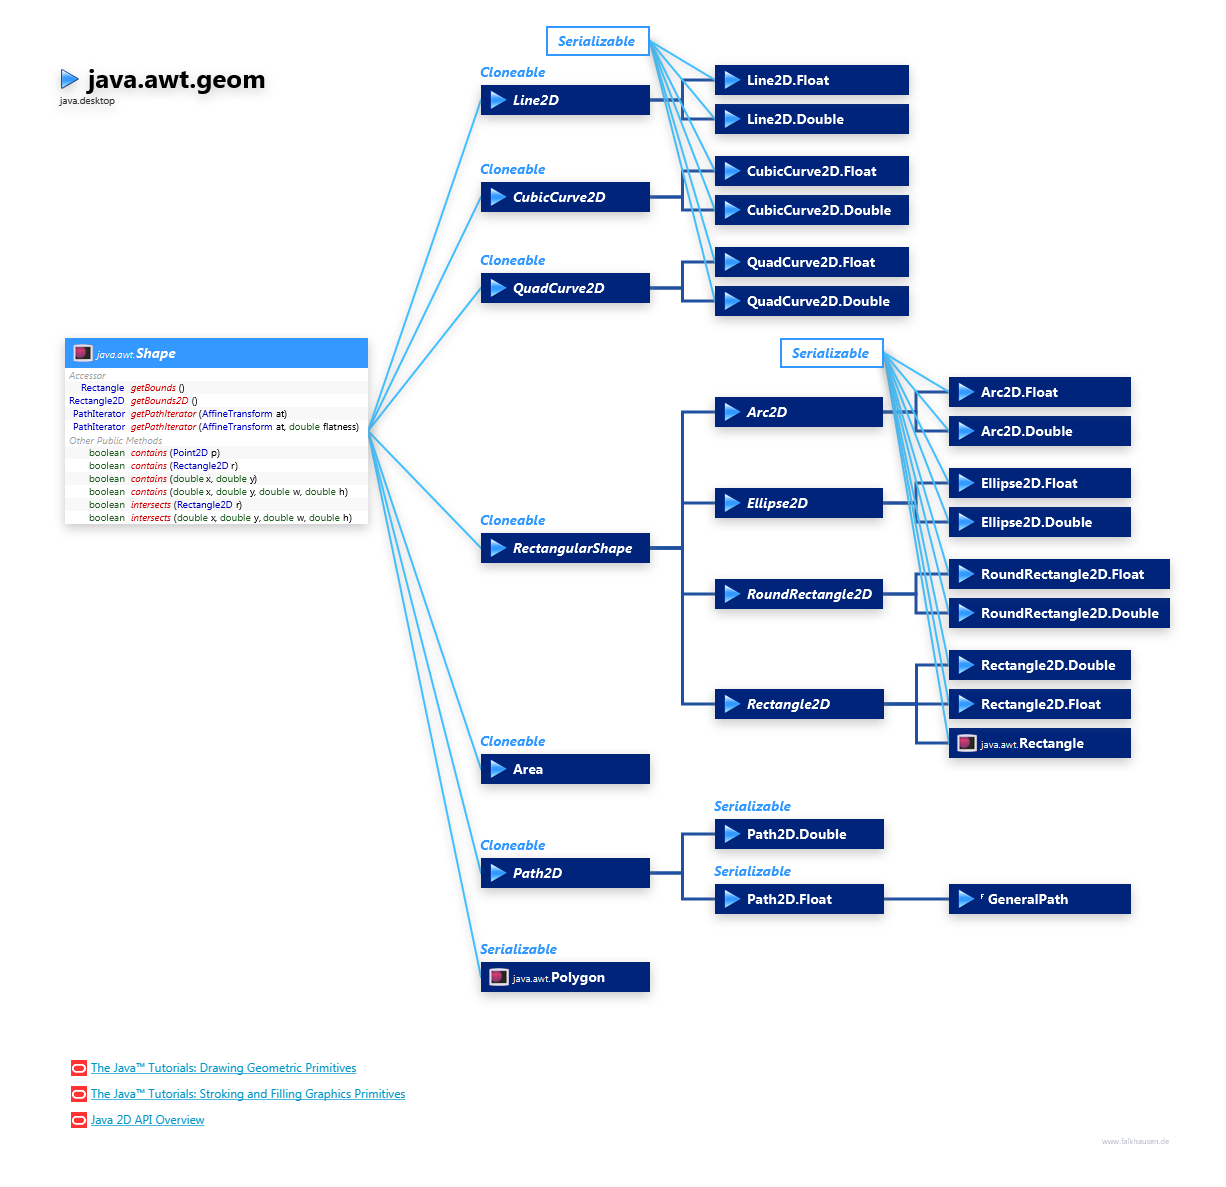 java.awt.geom Shape Hierarchy class diagram and api documentation for Java 10